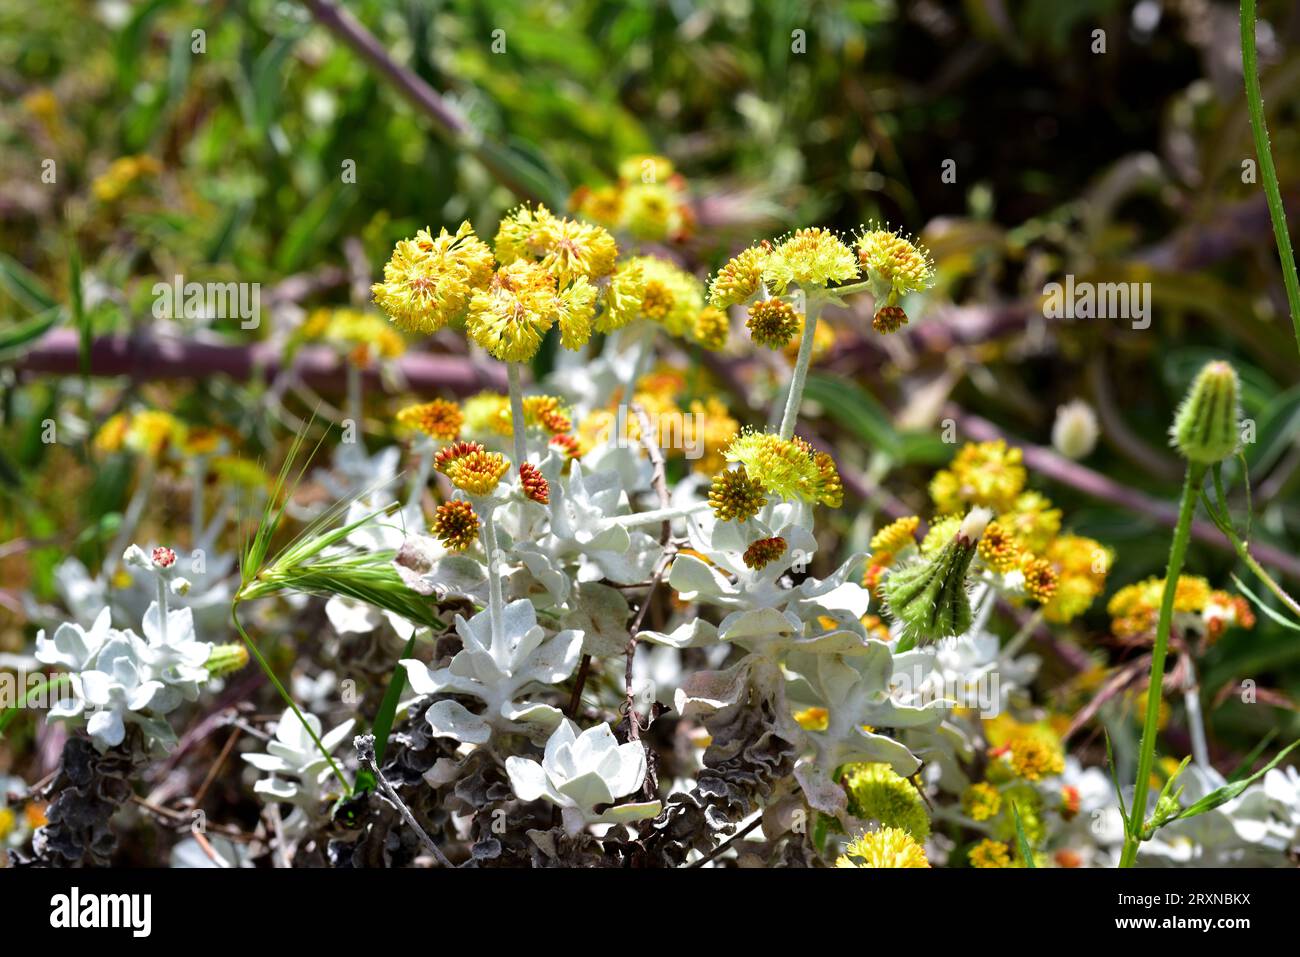 Conejo buckwheat or saffron buckwheat (Eriogonum crocatum) is a perennial shrub endemic to Conejo Valley, California, USA. Stock Photo